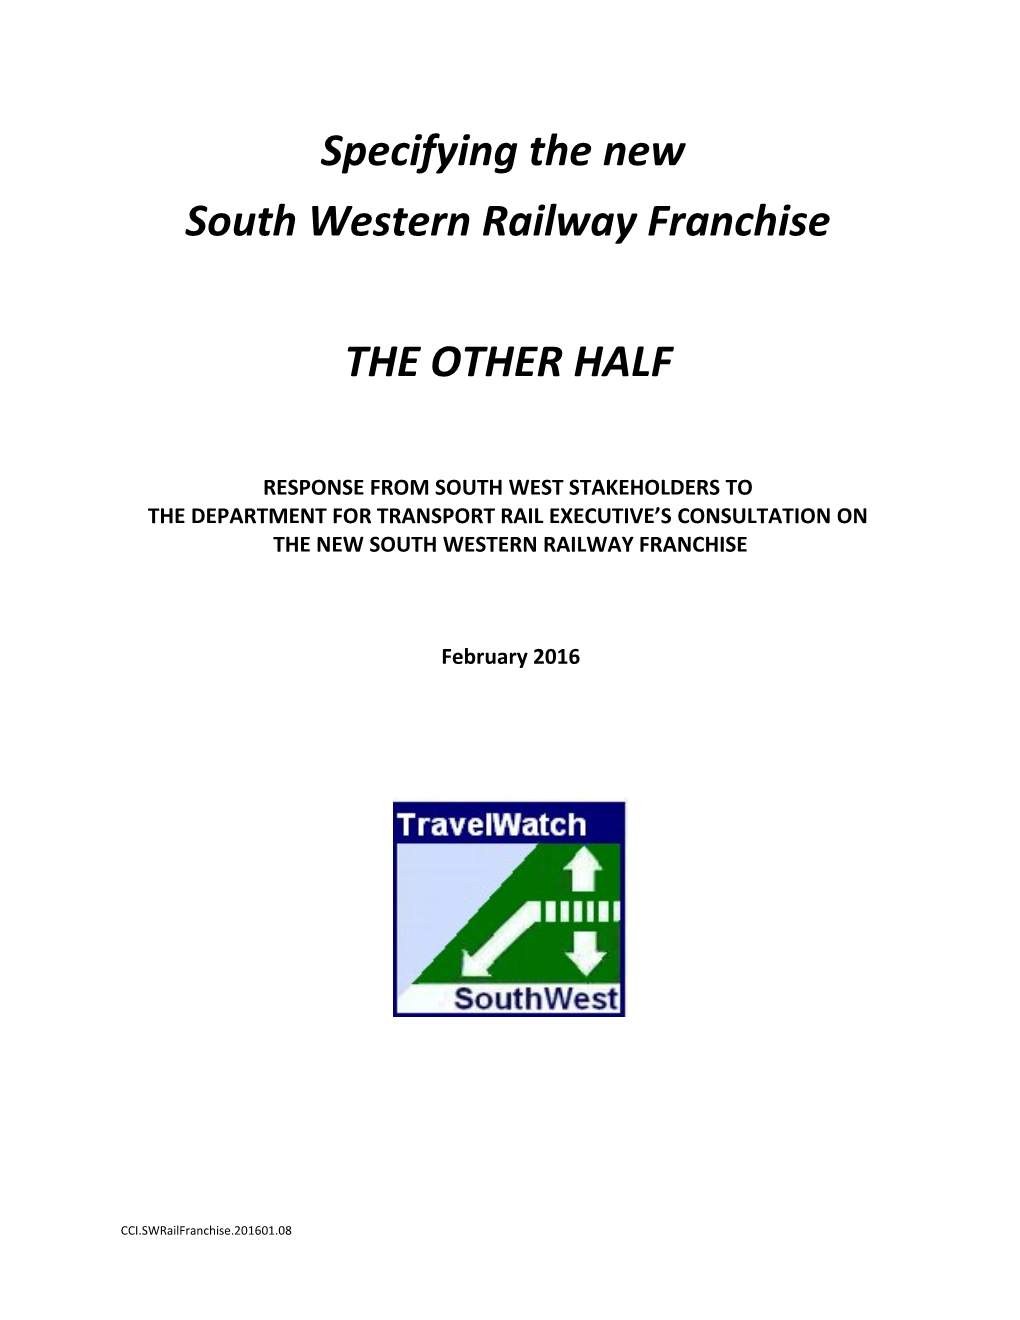 South Western Railway Franchise